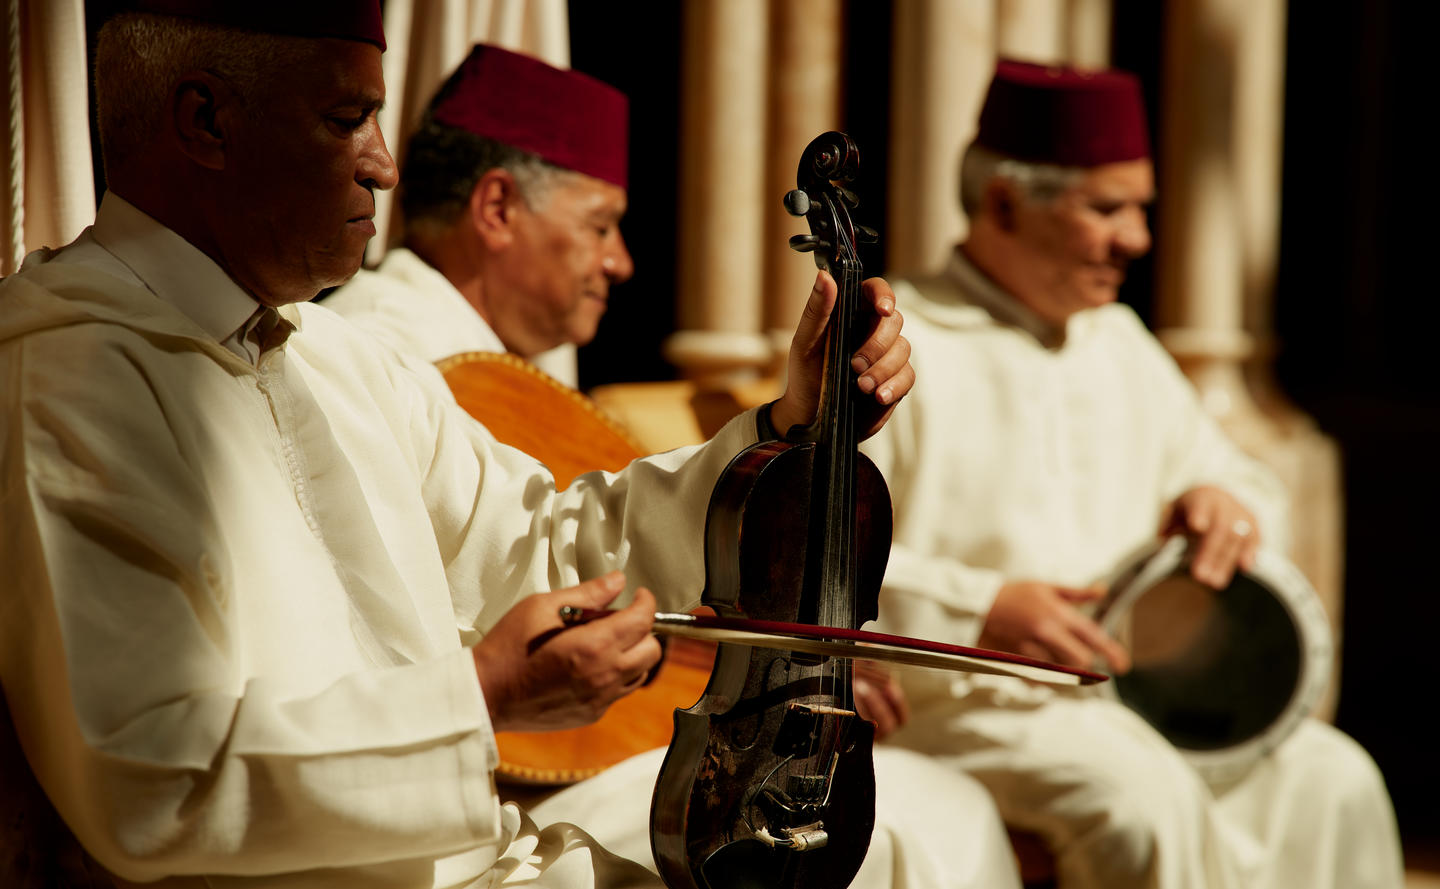 Amanjena-Moroccan-Restaurant-musicians.jpg